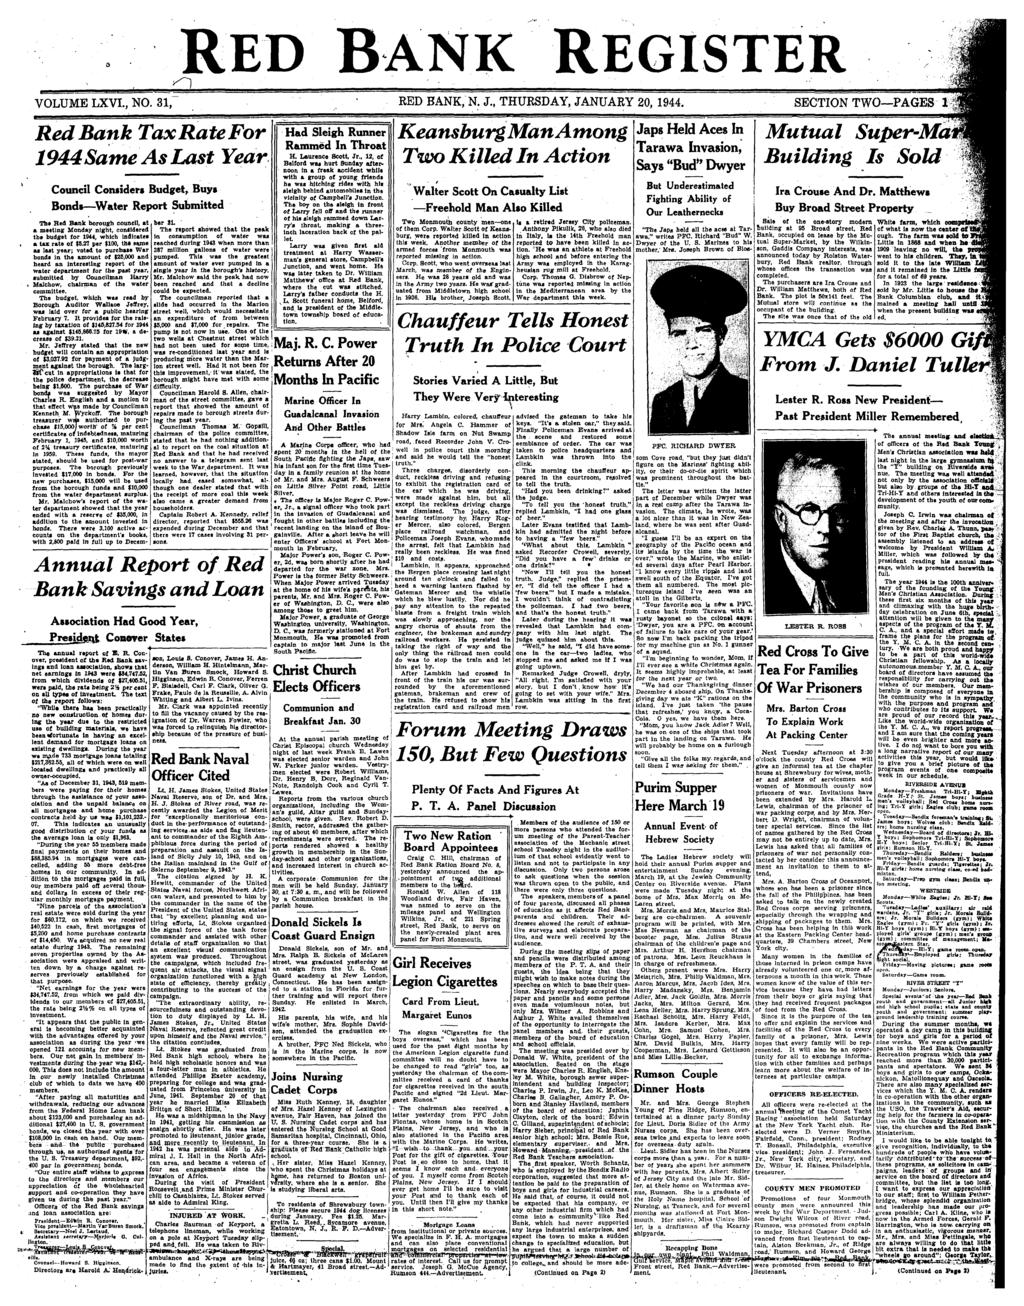 RED BANK REGISTER VOLUME LXVL, NO. 31, RED BANK, N. J., THURSDAY, JANUARY 20, 1944.